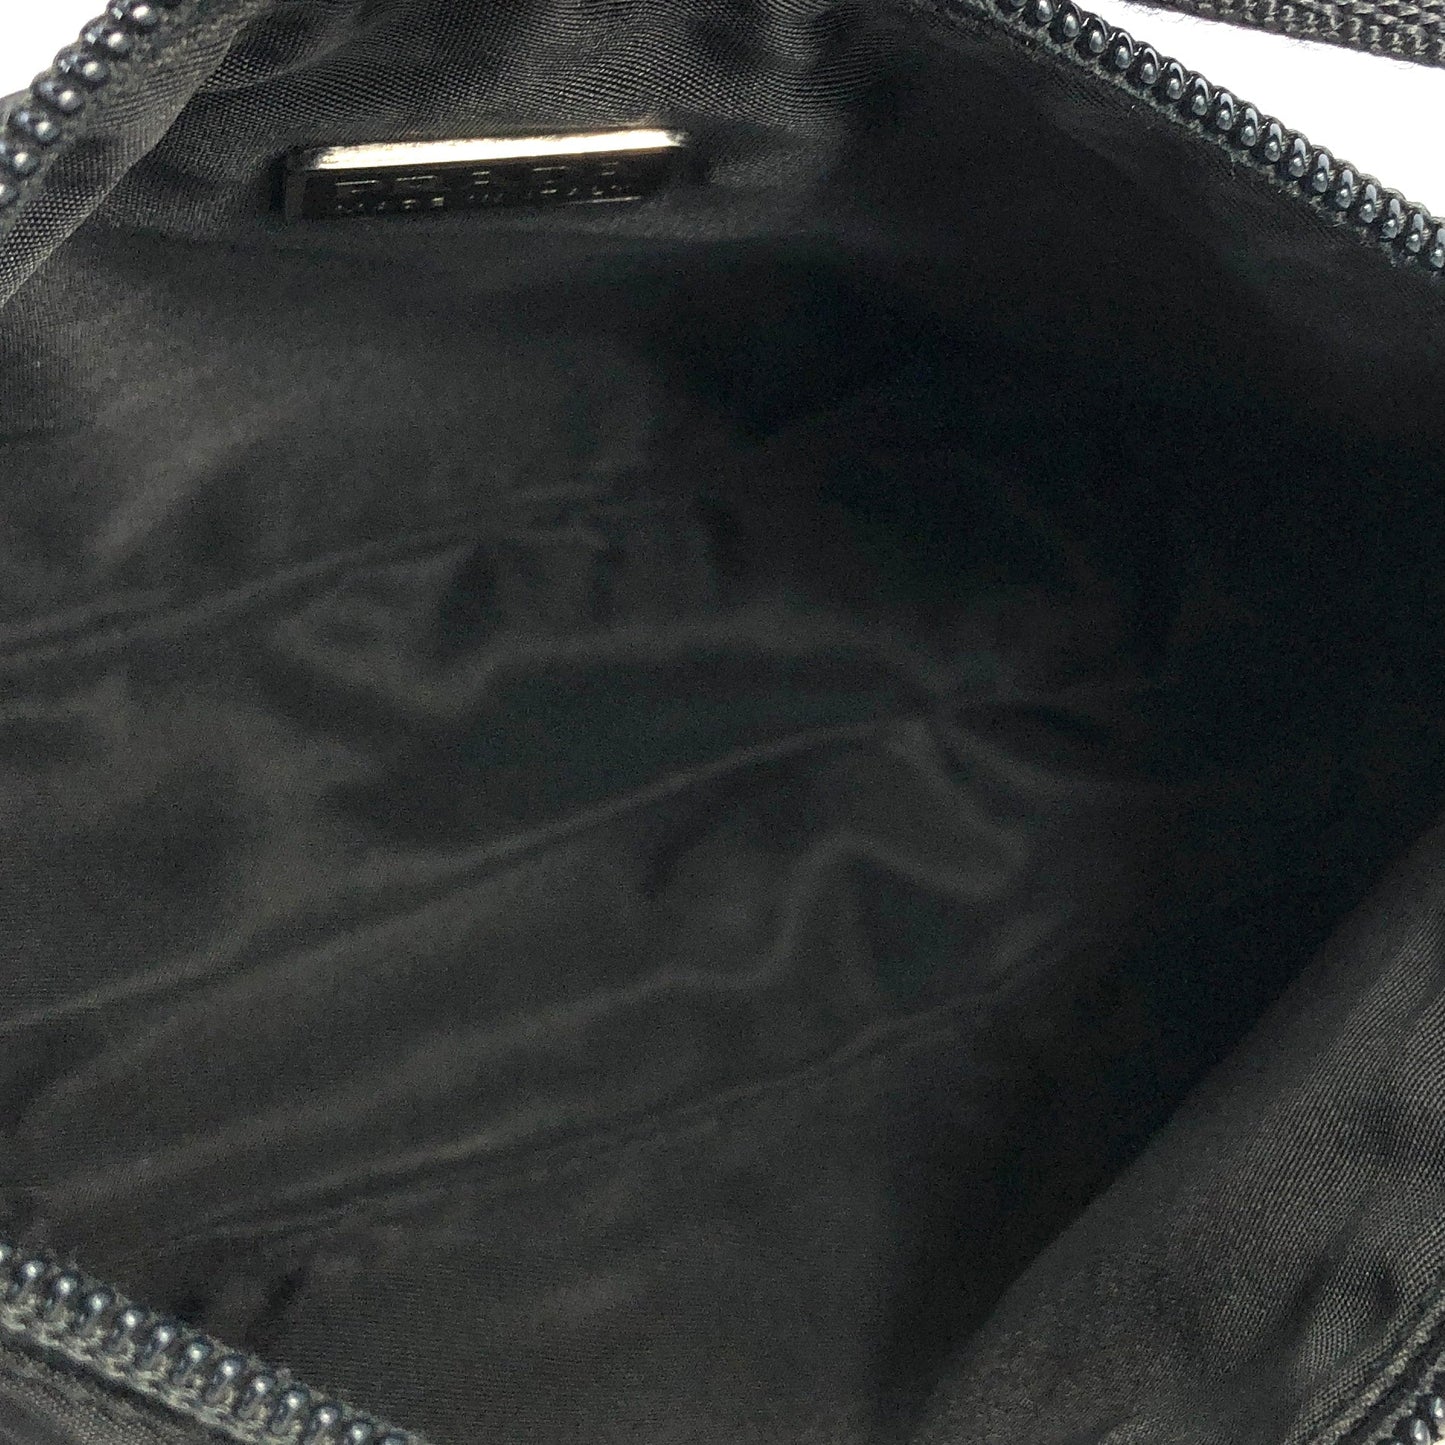 PRADA Triangle logo Nylon Small Handbag Black Vintage zxc8ev